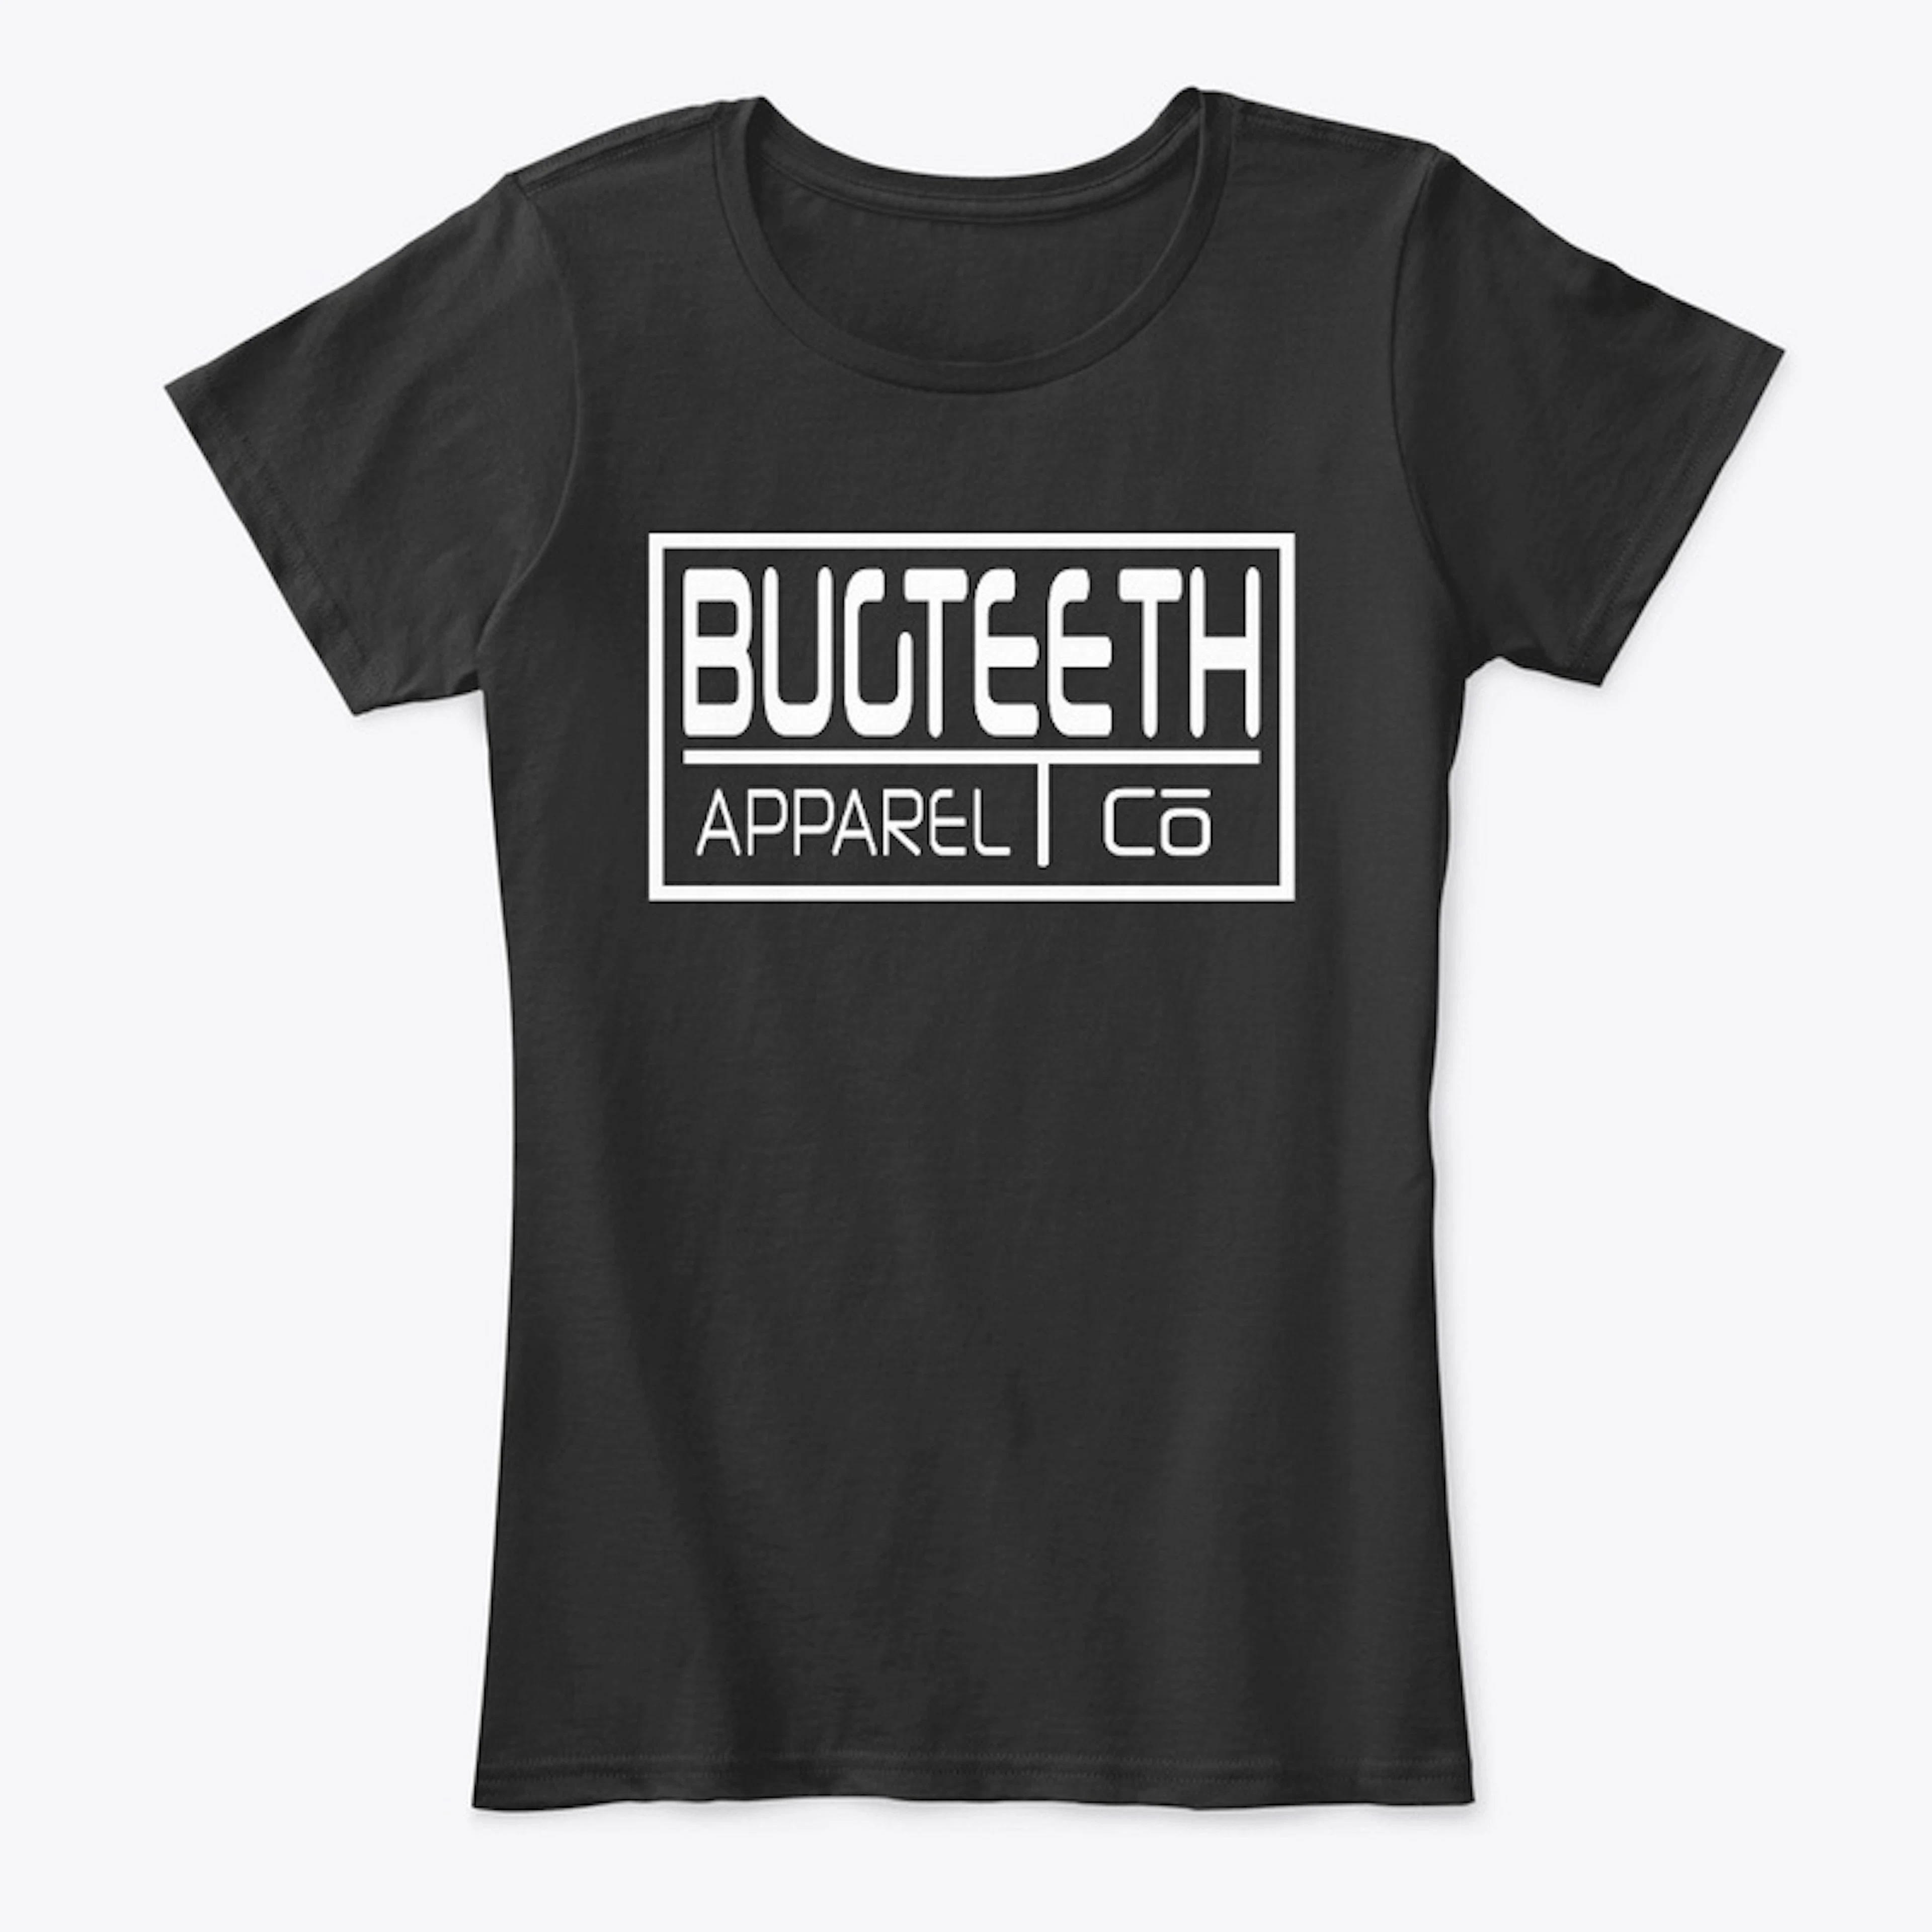 Bugteeth Apparel Company